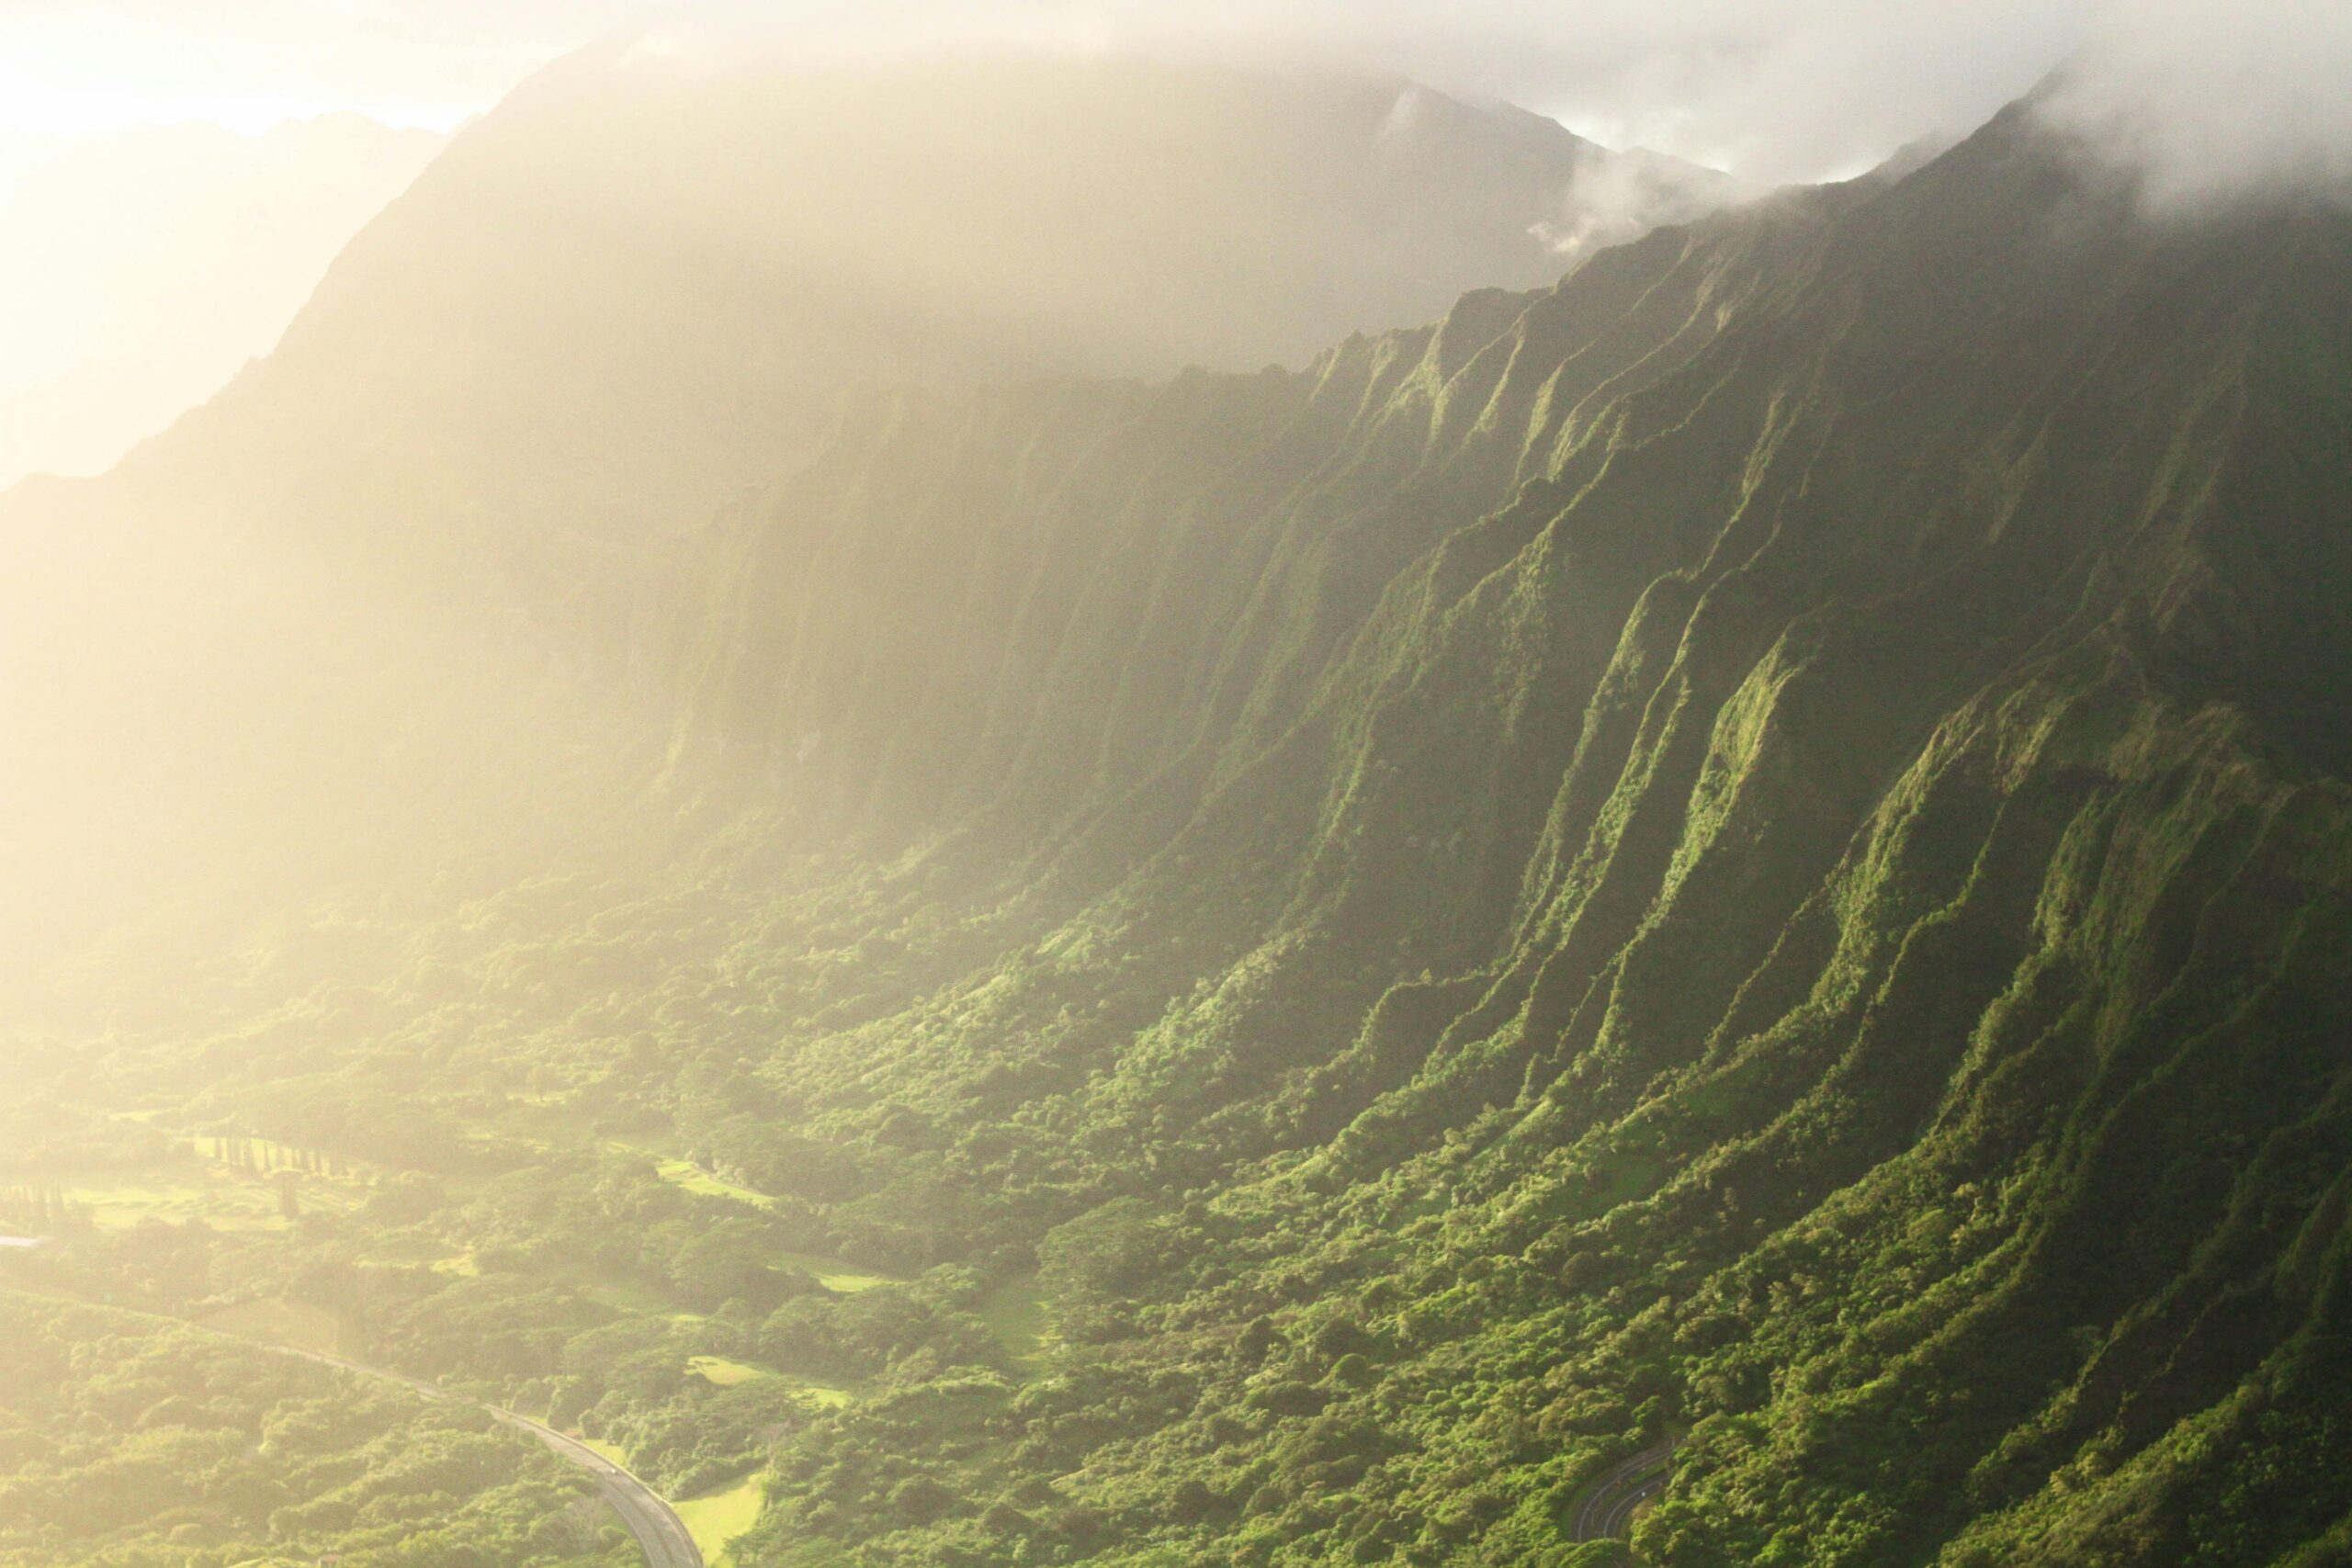 Image of Hawaii mountains